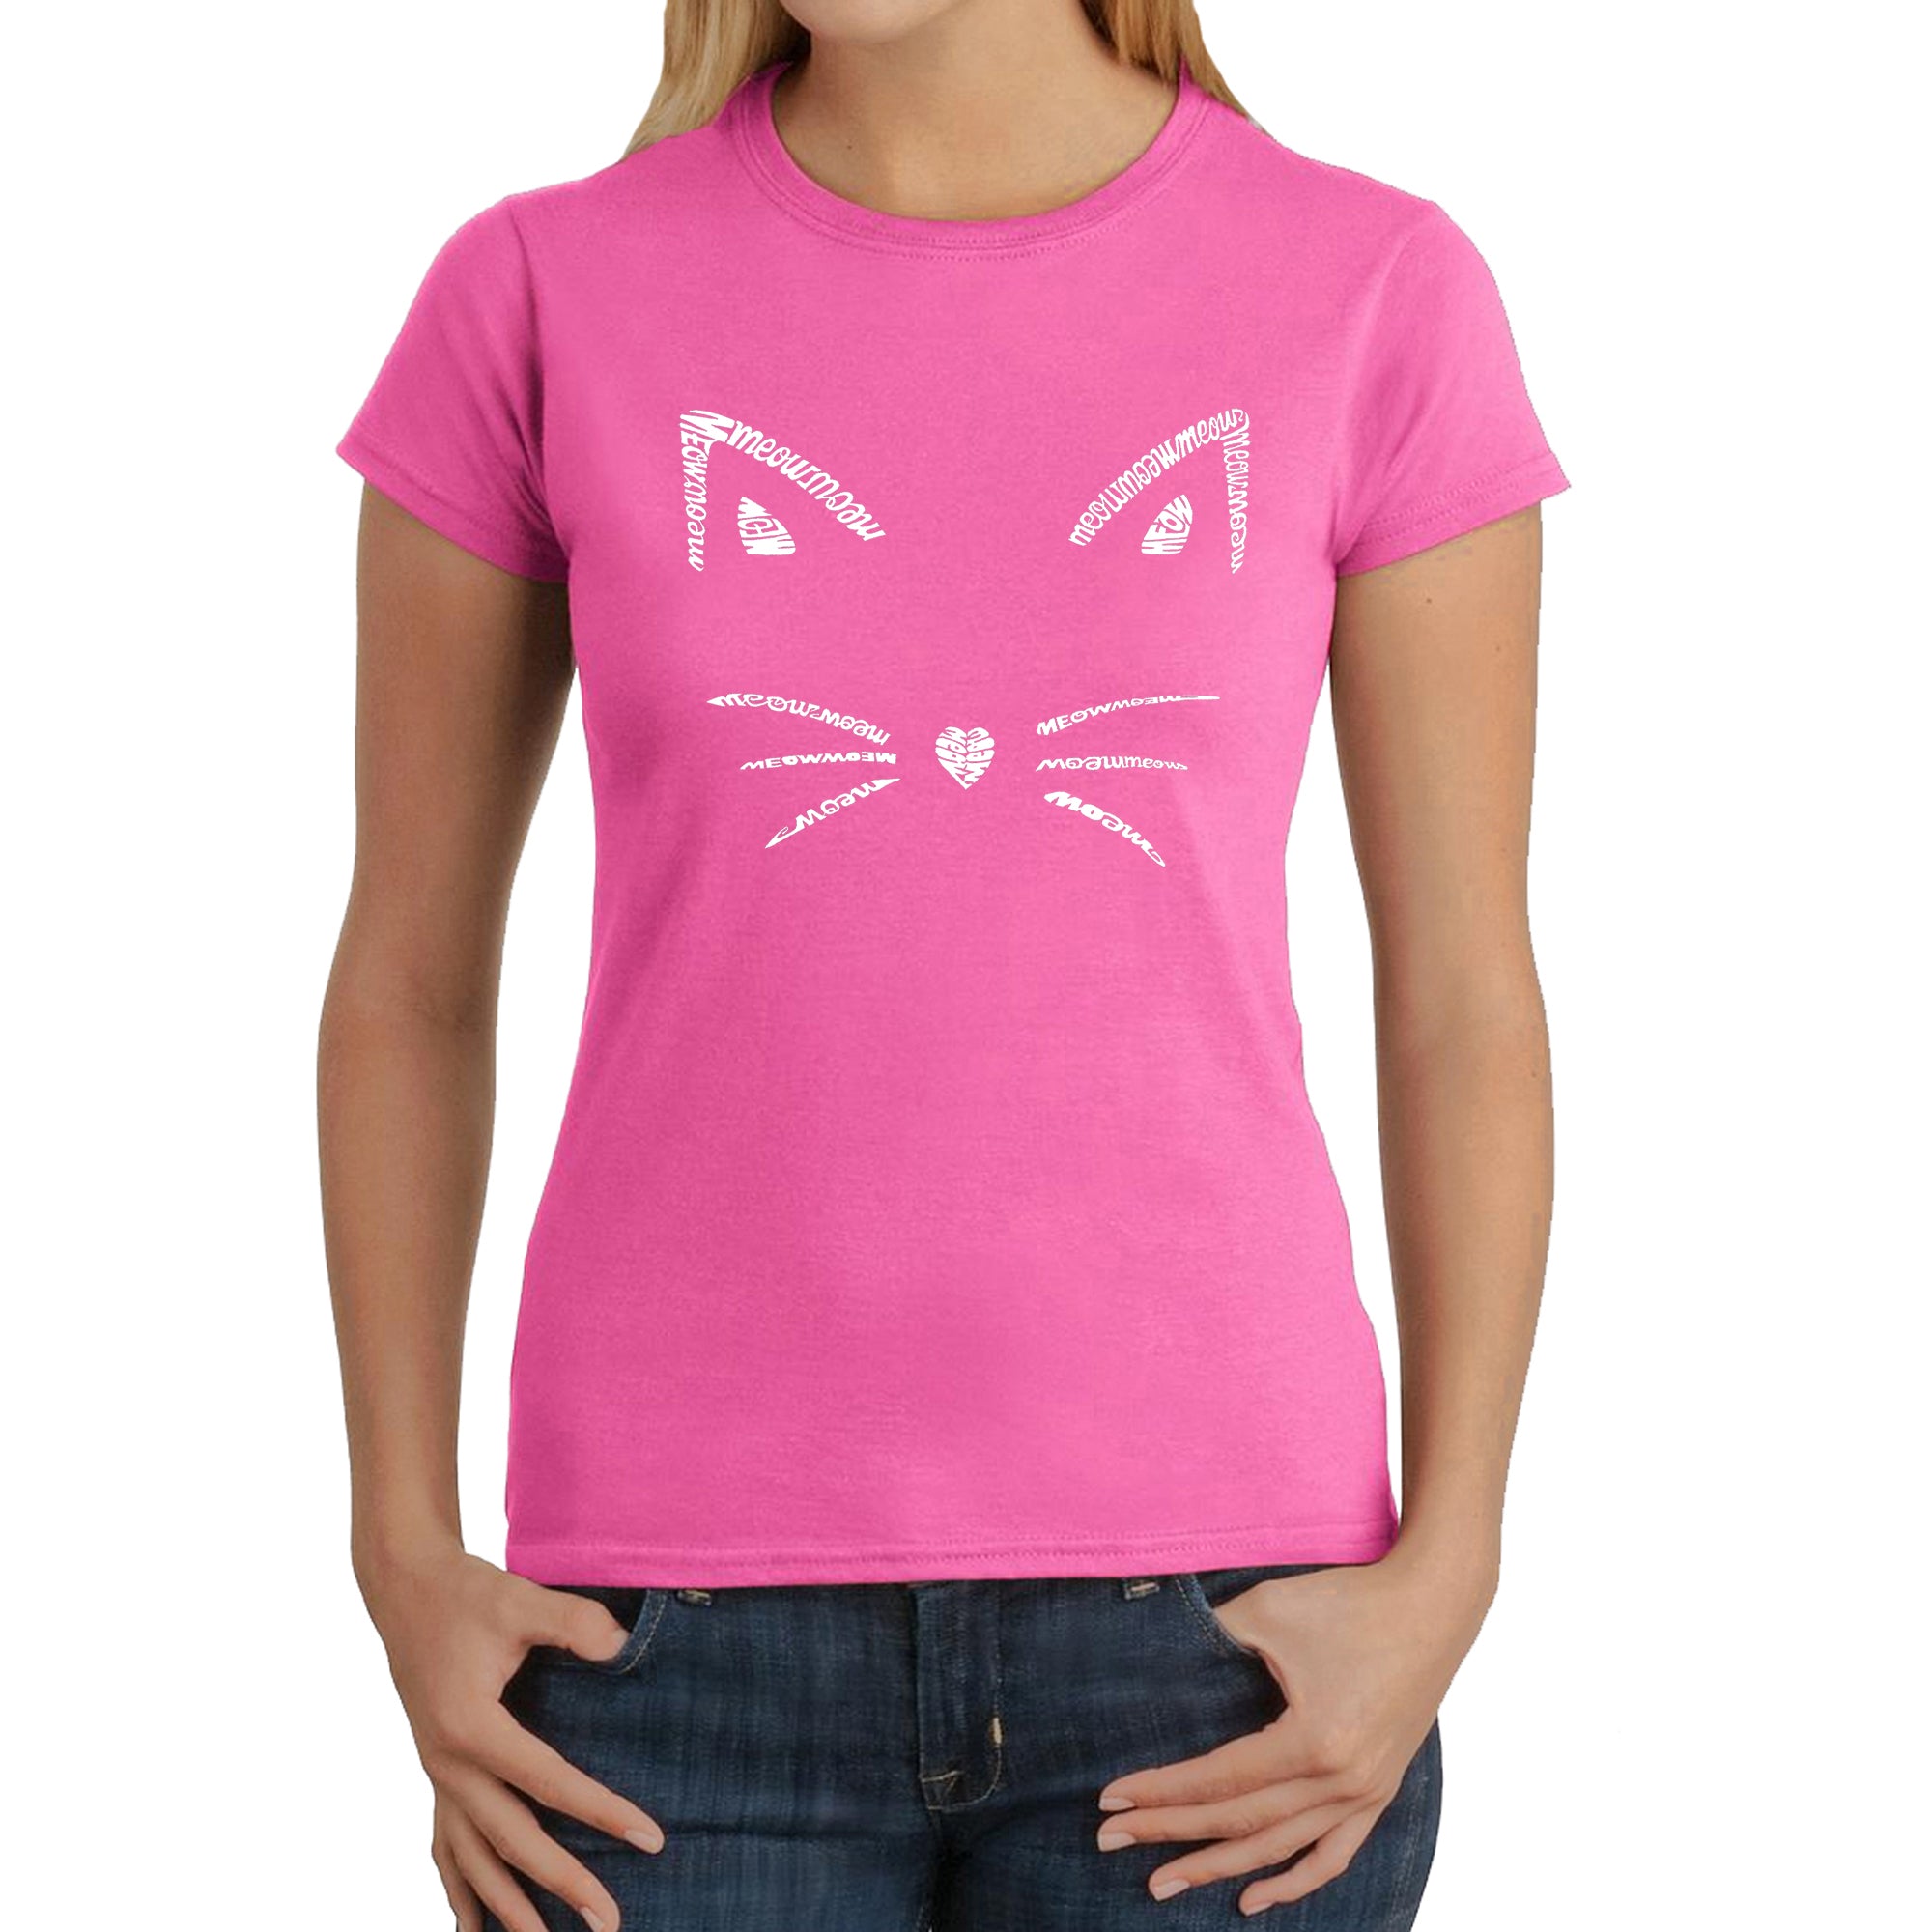 Whiskers - Women's Word Art T-Shirt - Pink - Medium